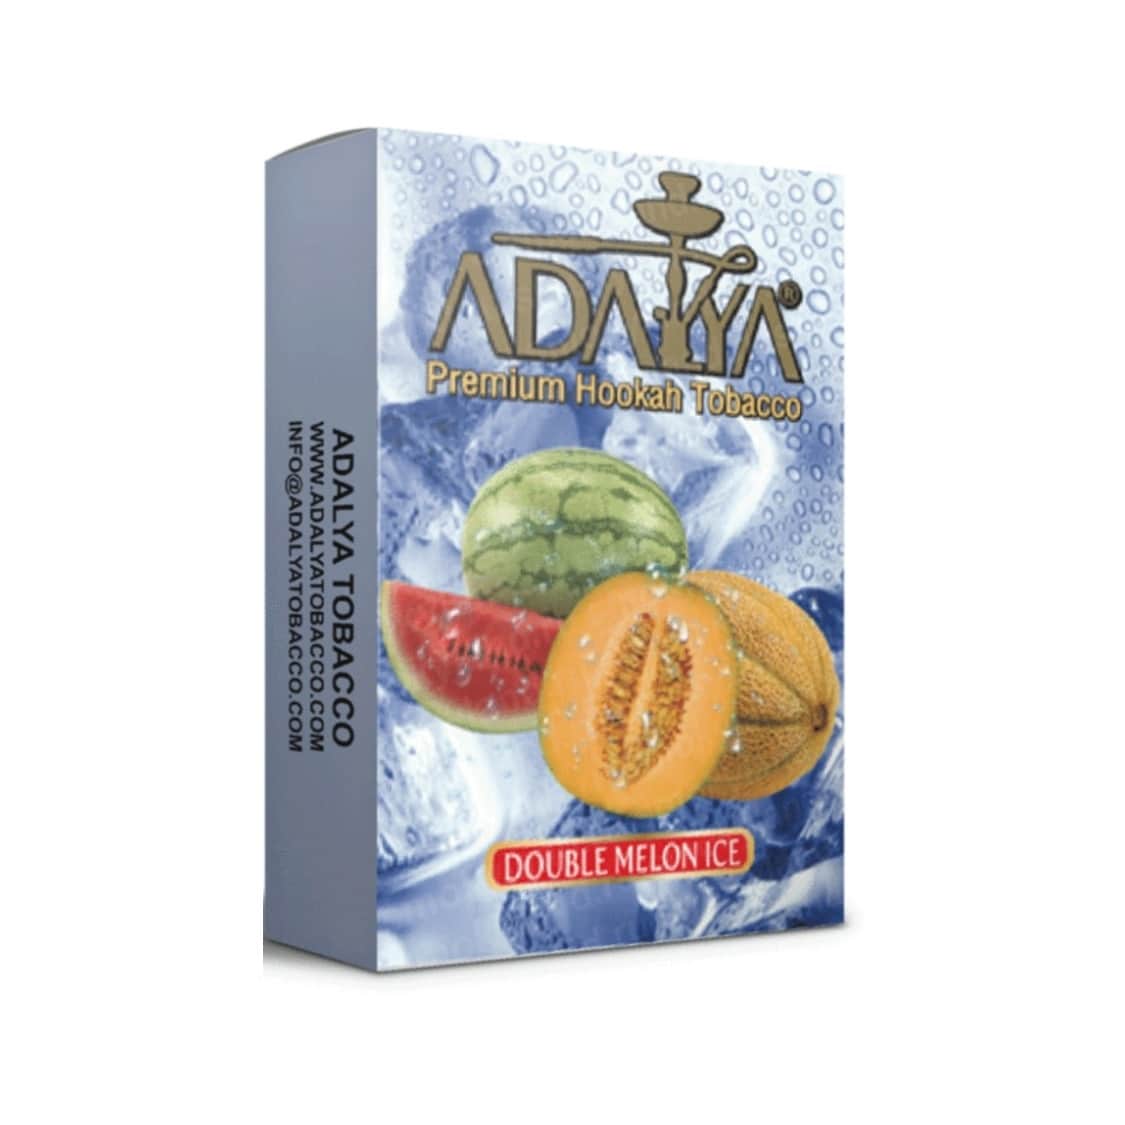 Adalya Double Melon Ice Hookah Flavour